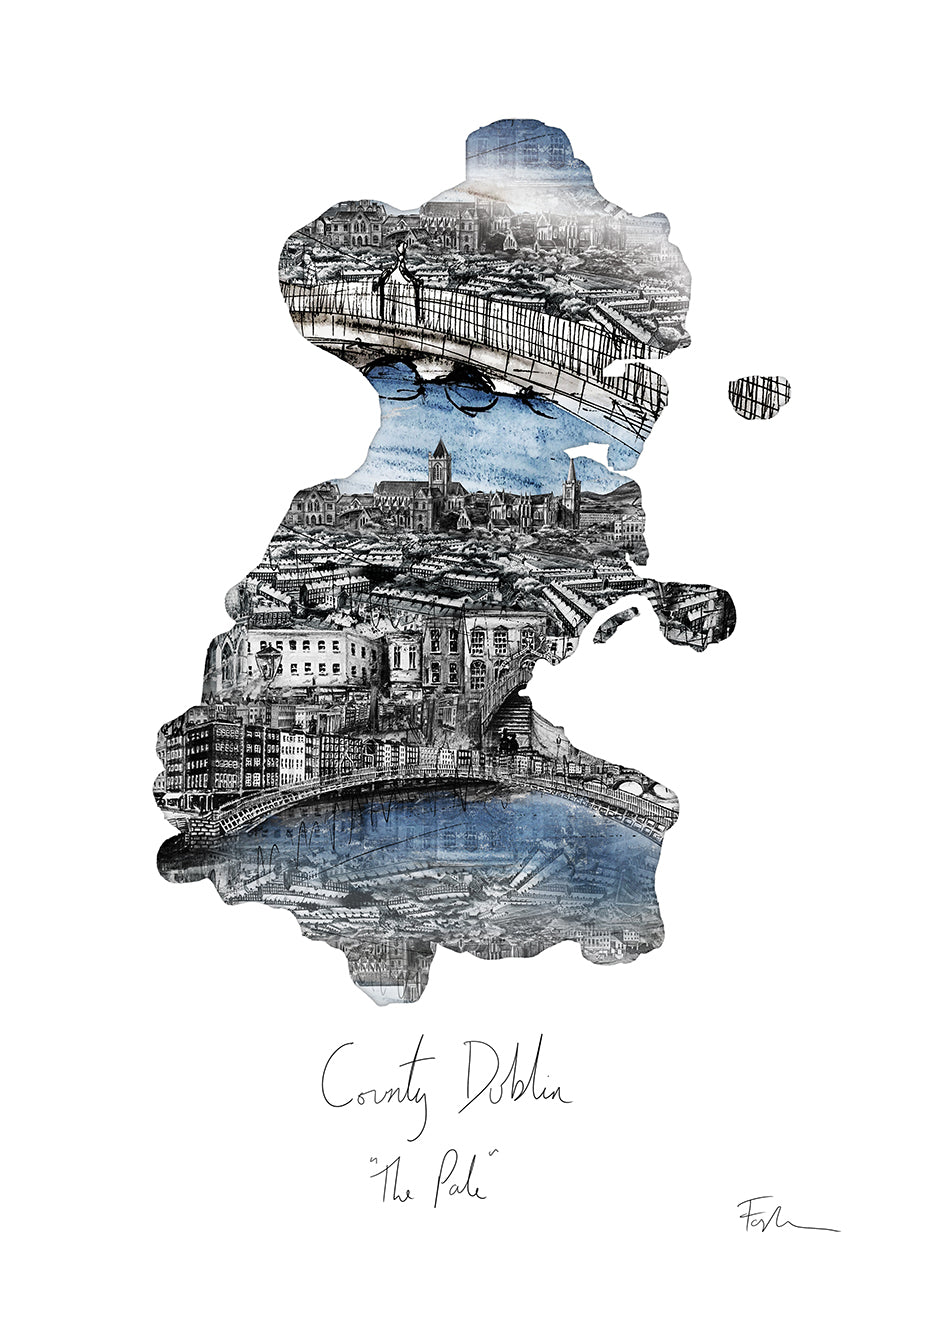 County Dublin, The Pale